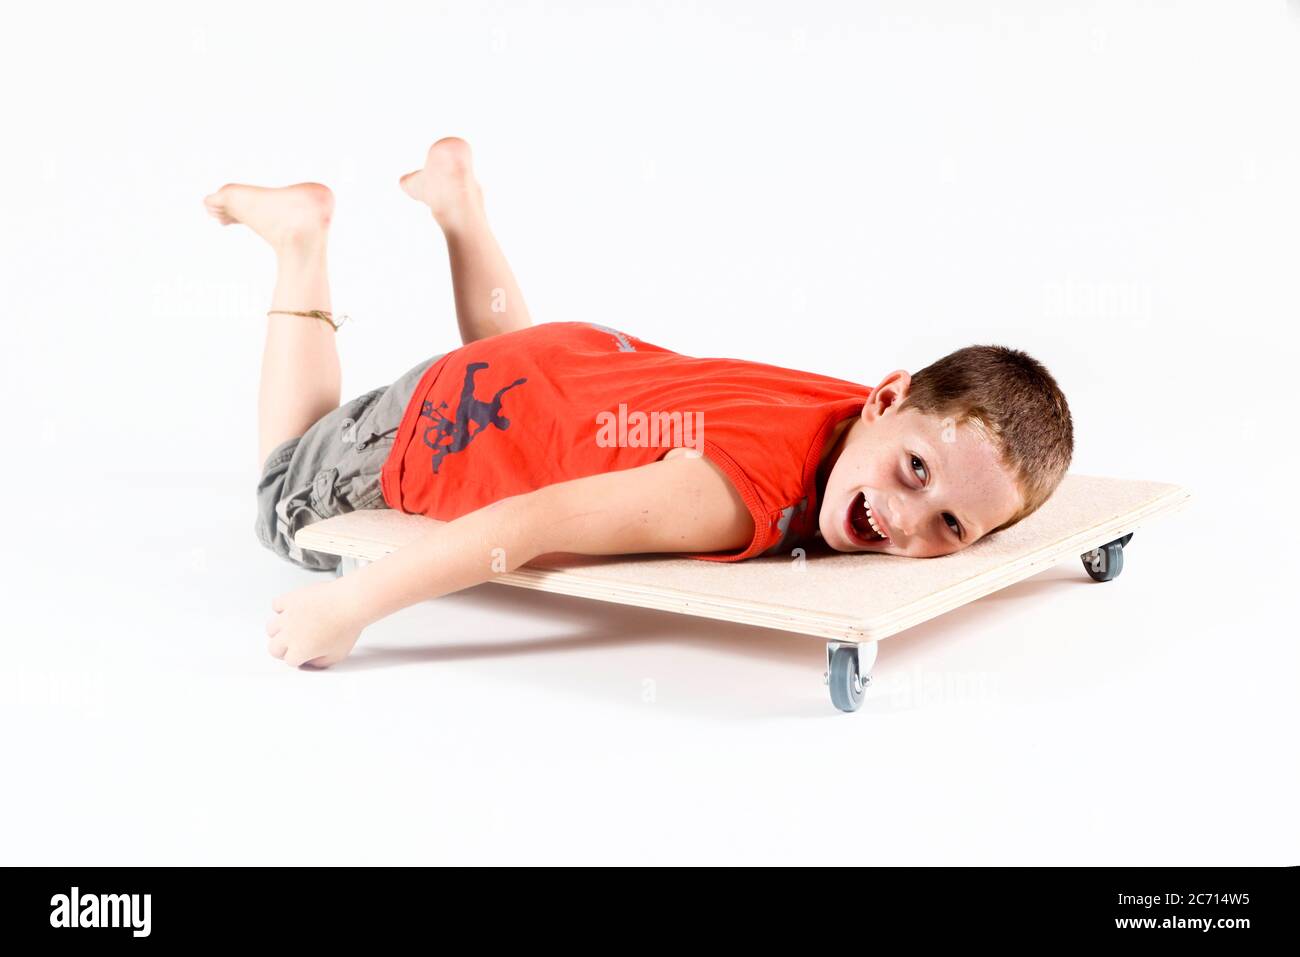 Indoor playground boy plays on wheeled board On white Background Stock Photo